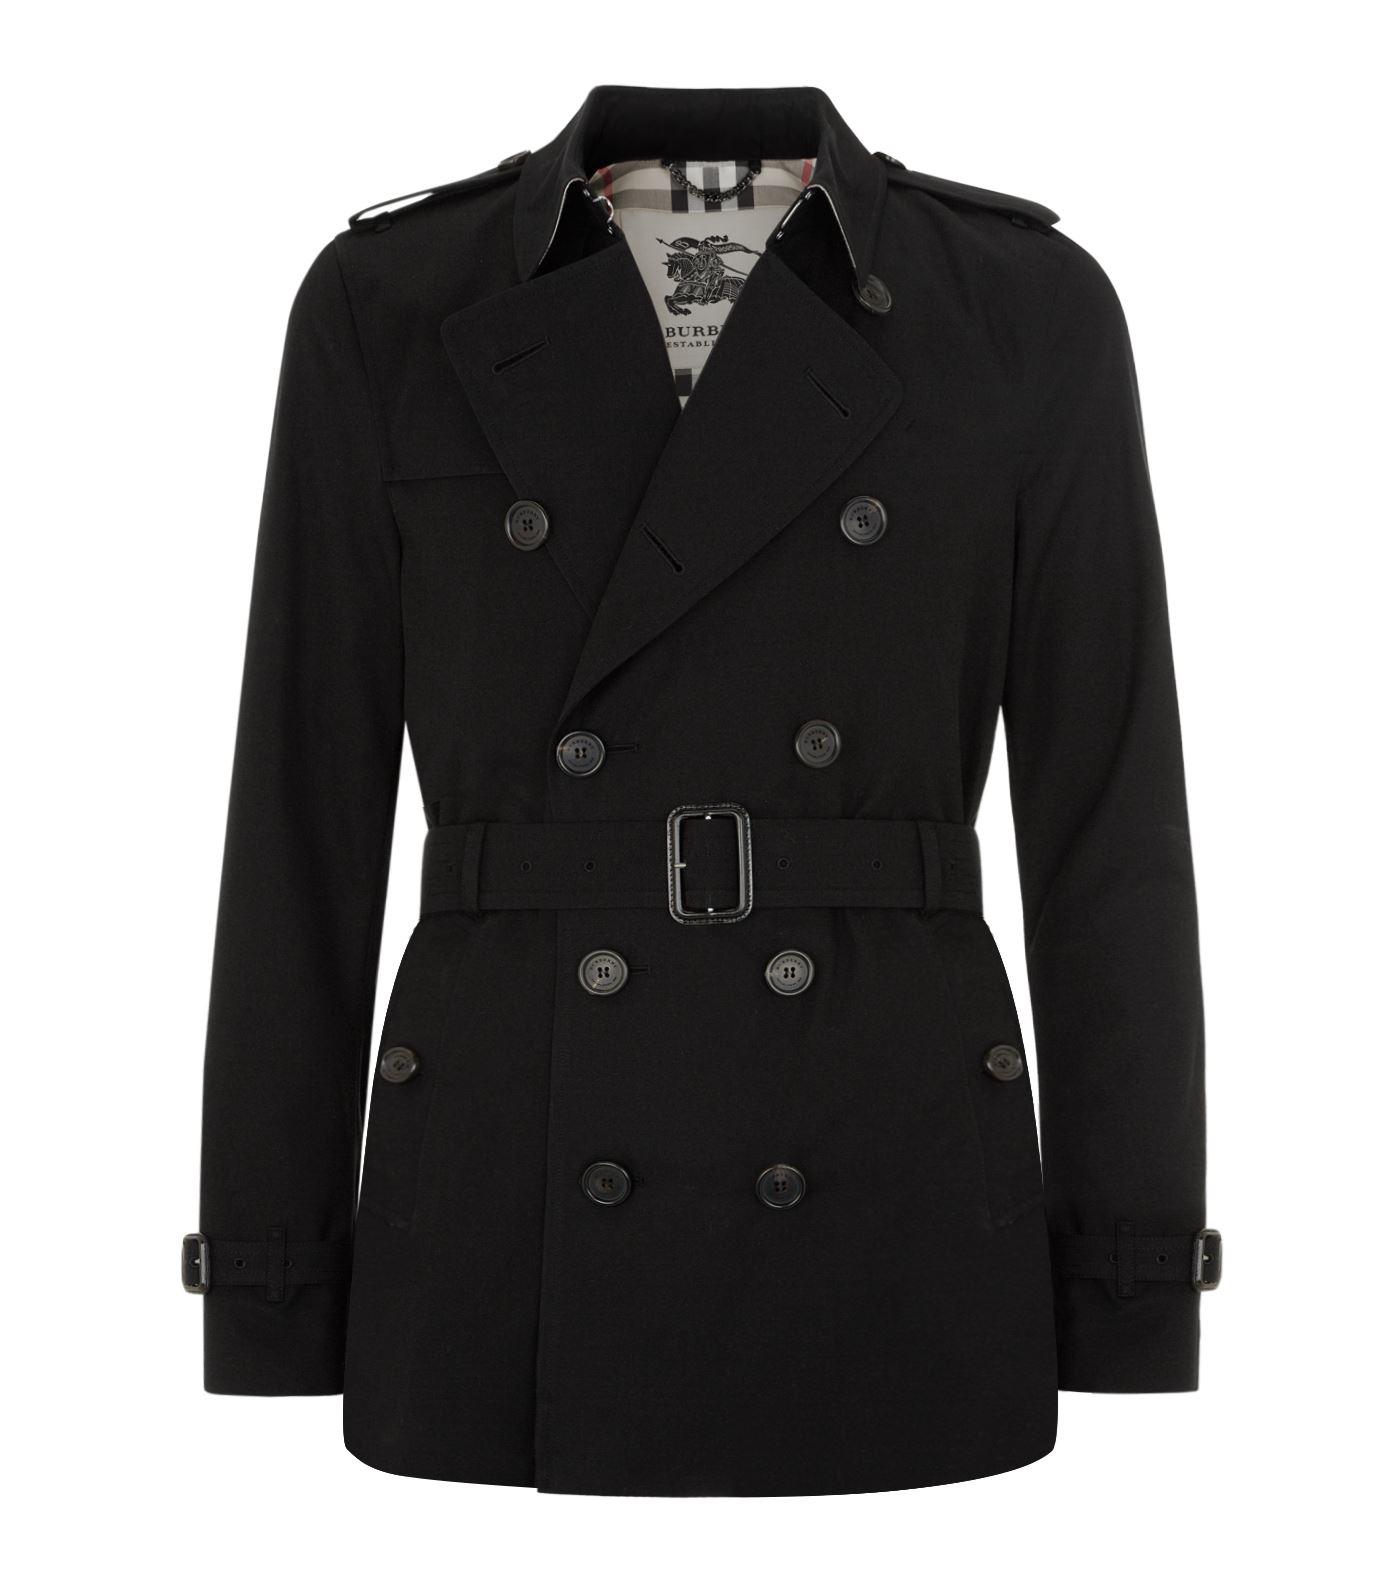 Burberry Cotton Kensington Short Heritage Trench Coat in Black for Men -  Lyst